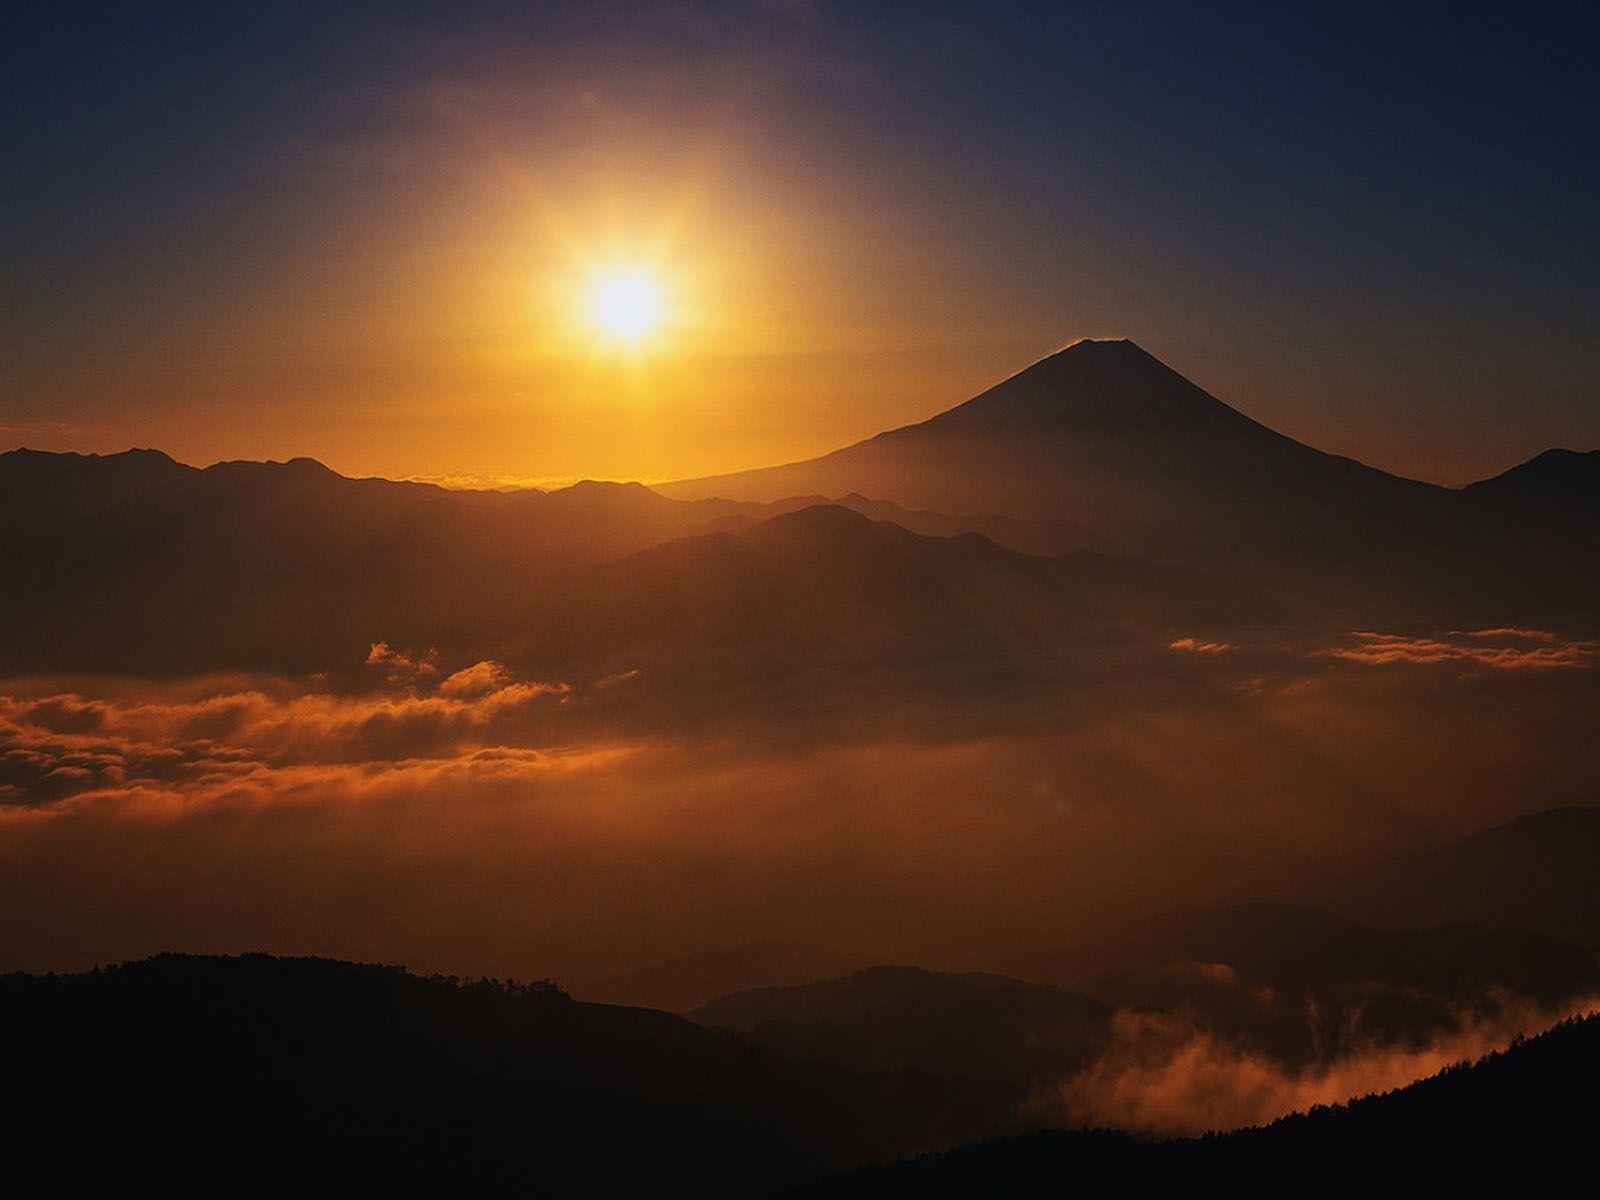 Sunrise on the Mountain”